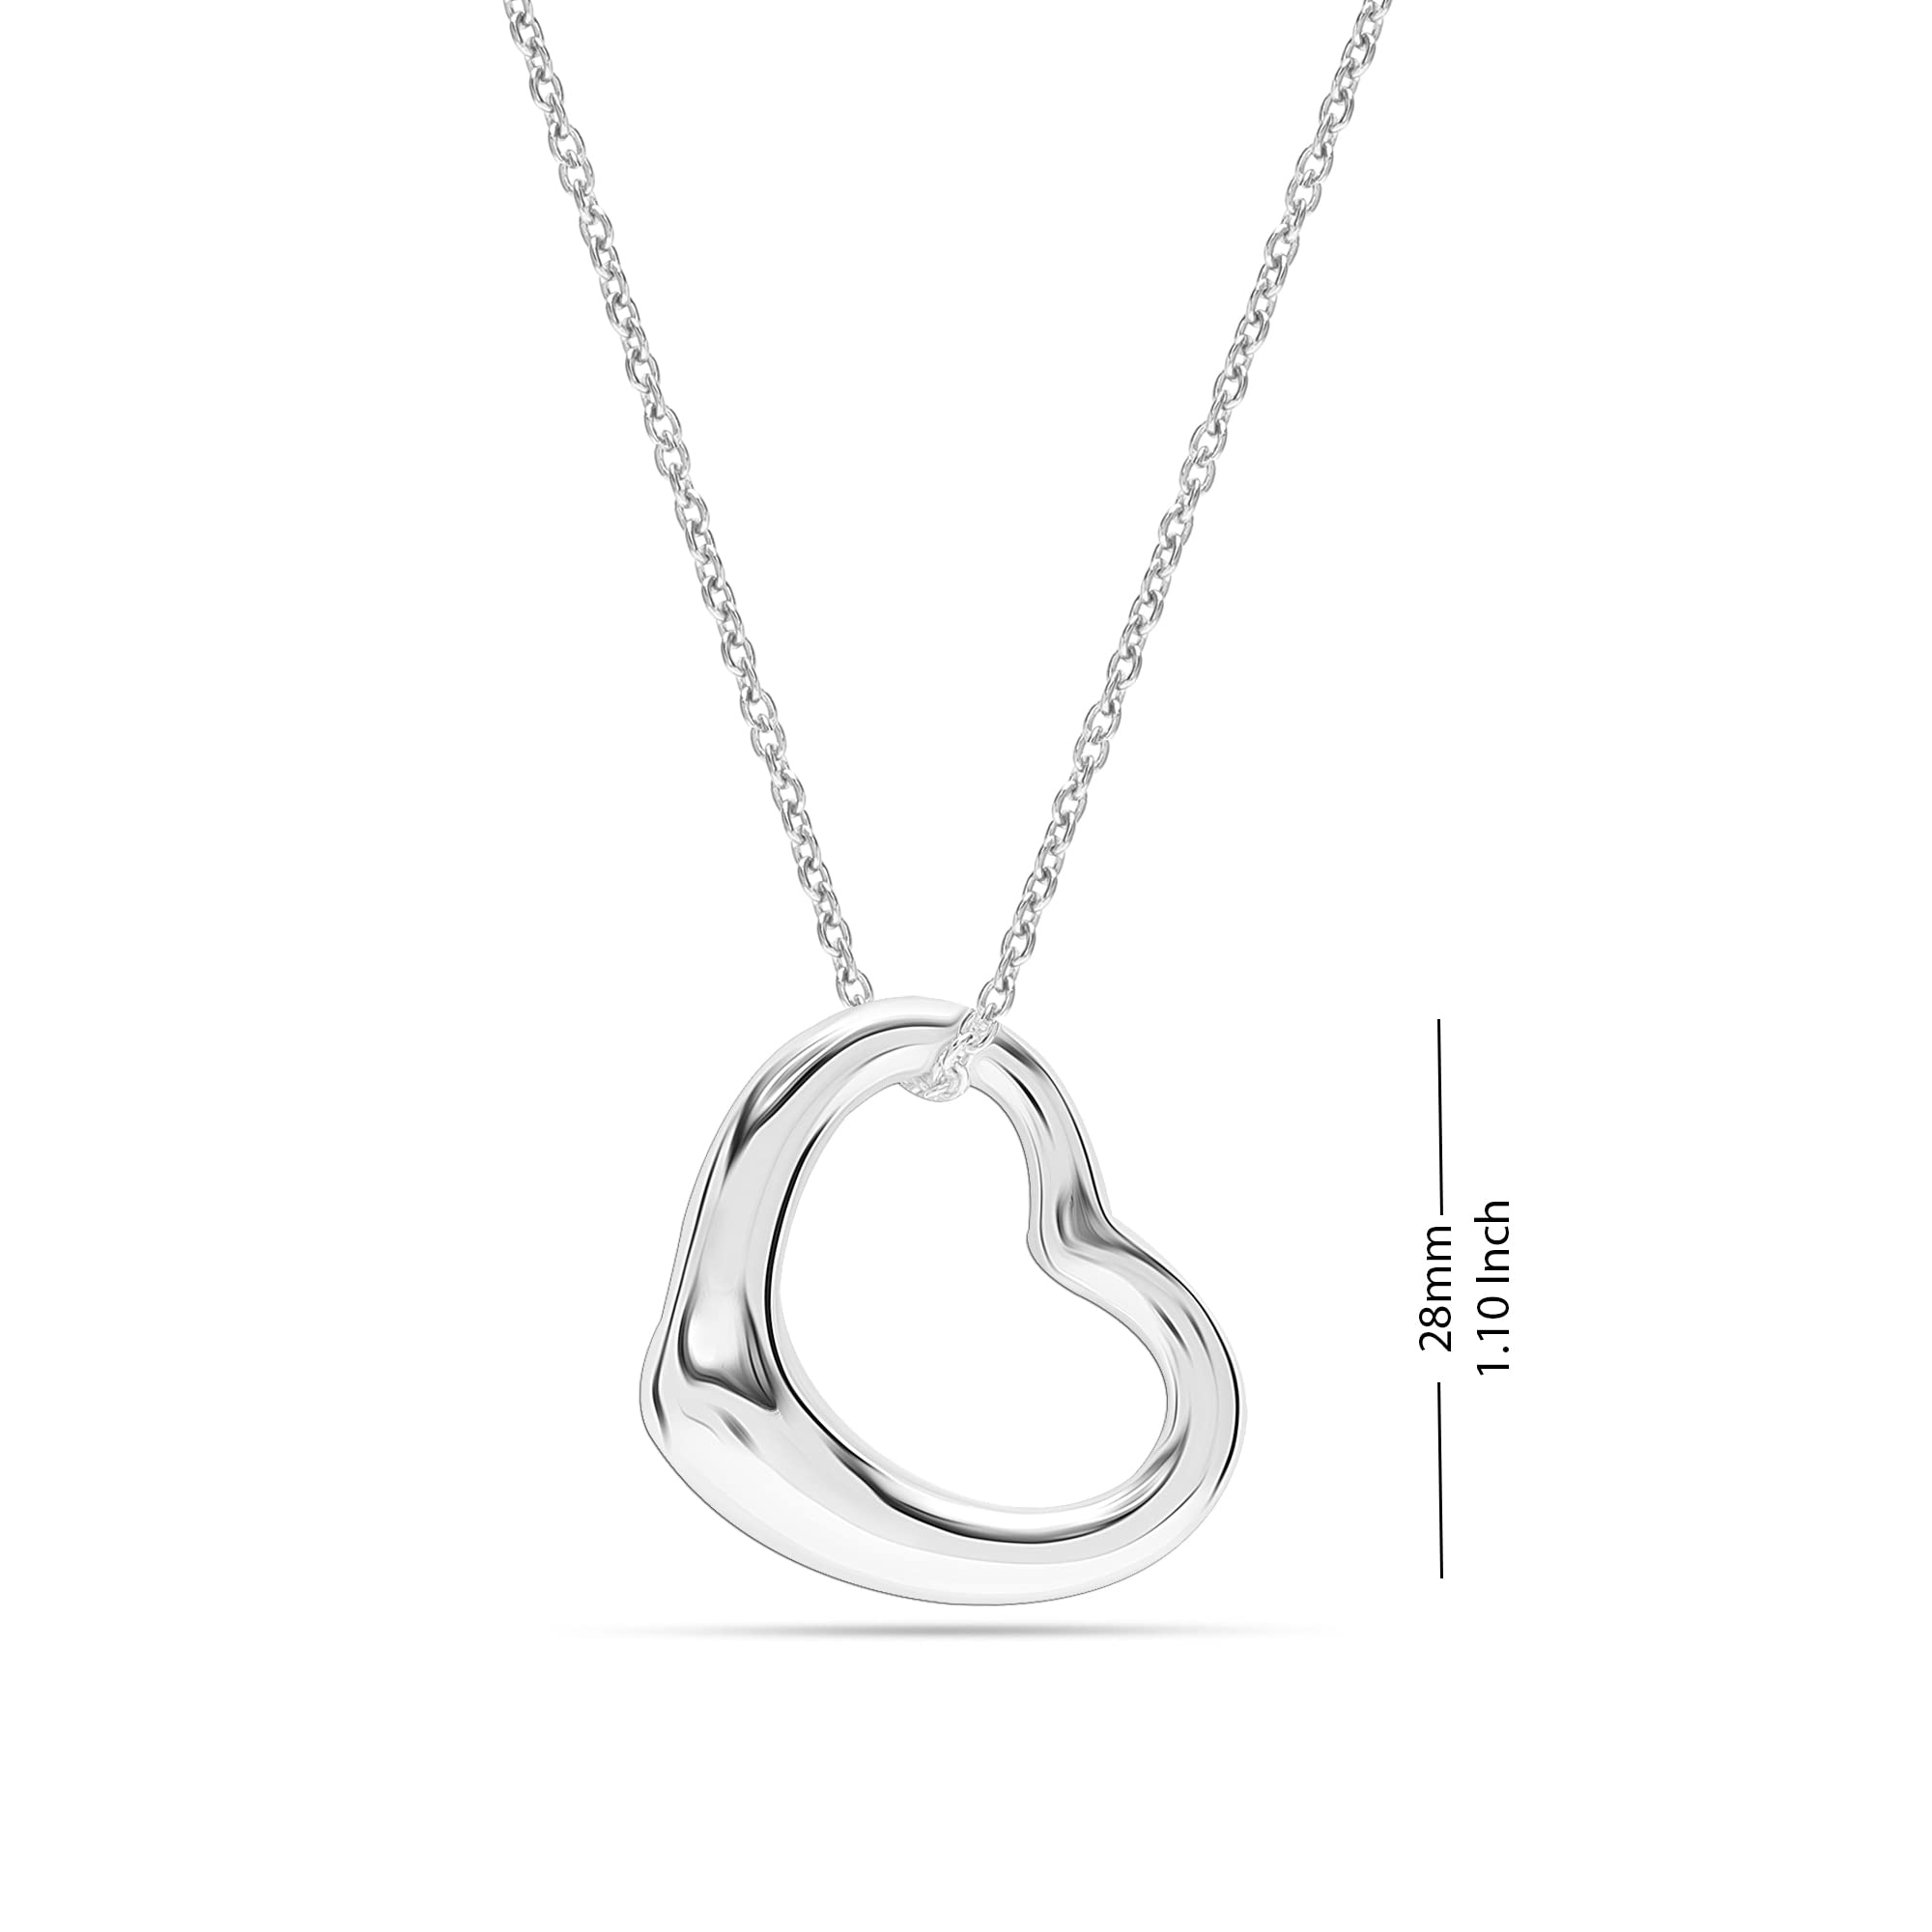 925 Sterling Silver Open Heart Pendant Necklace for Teen Women